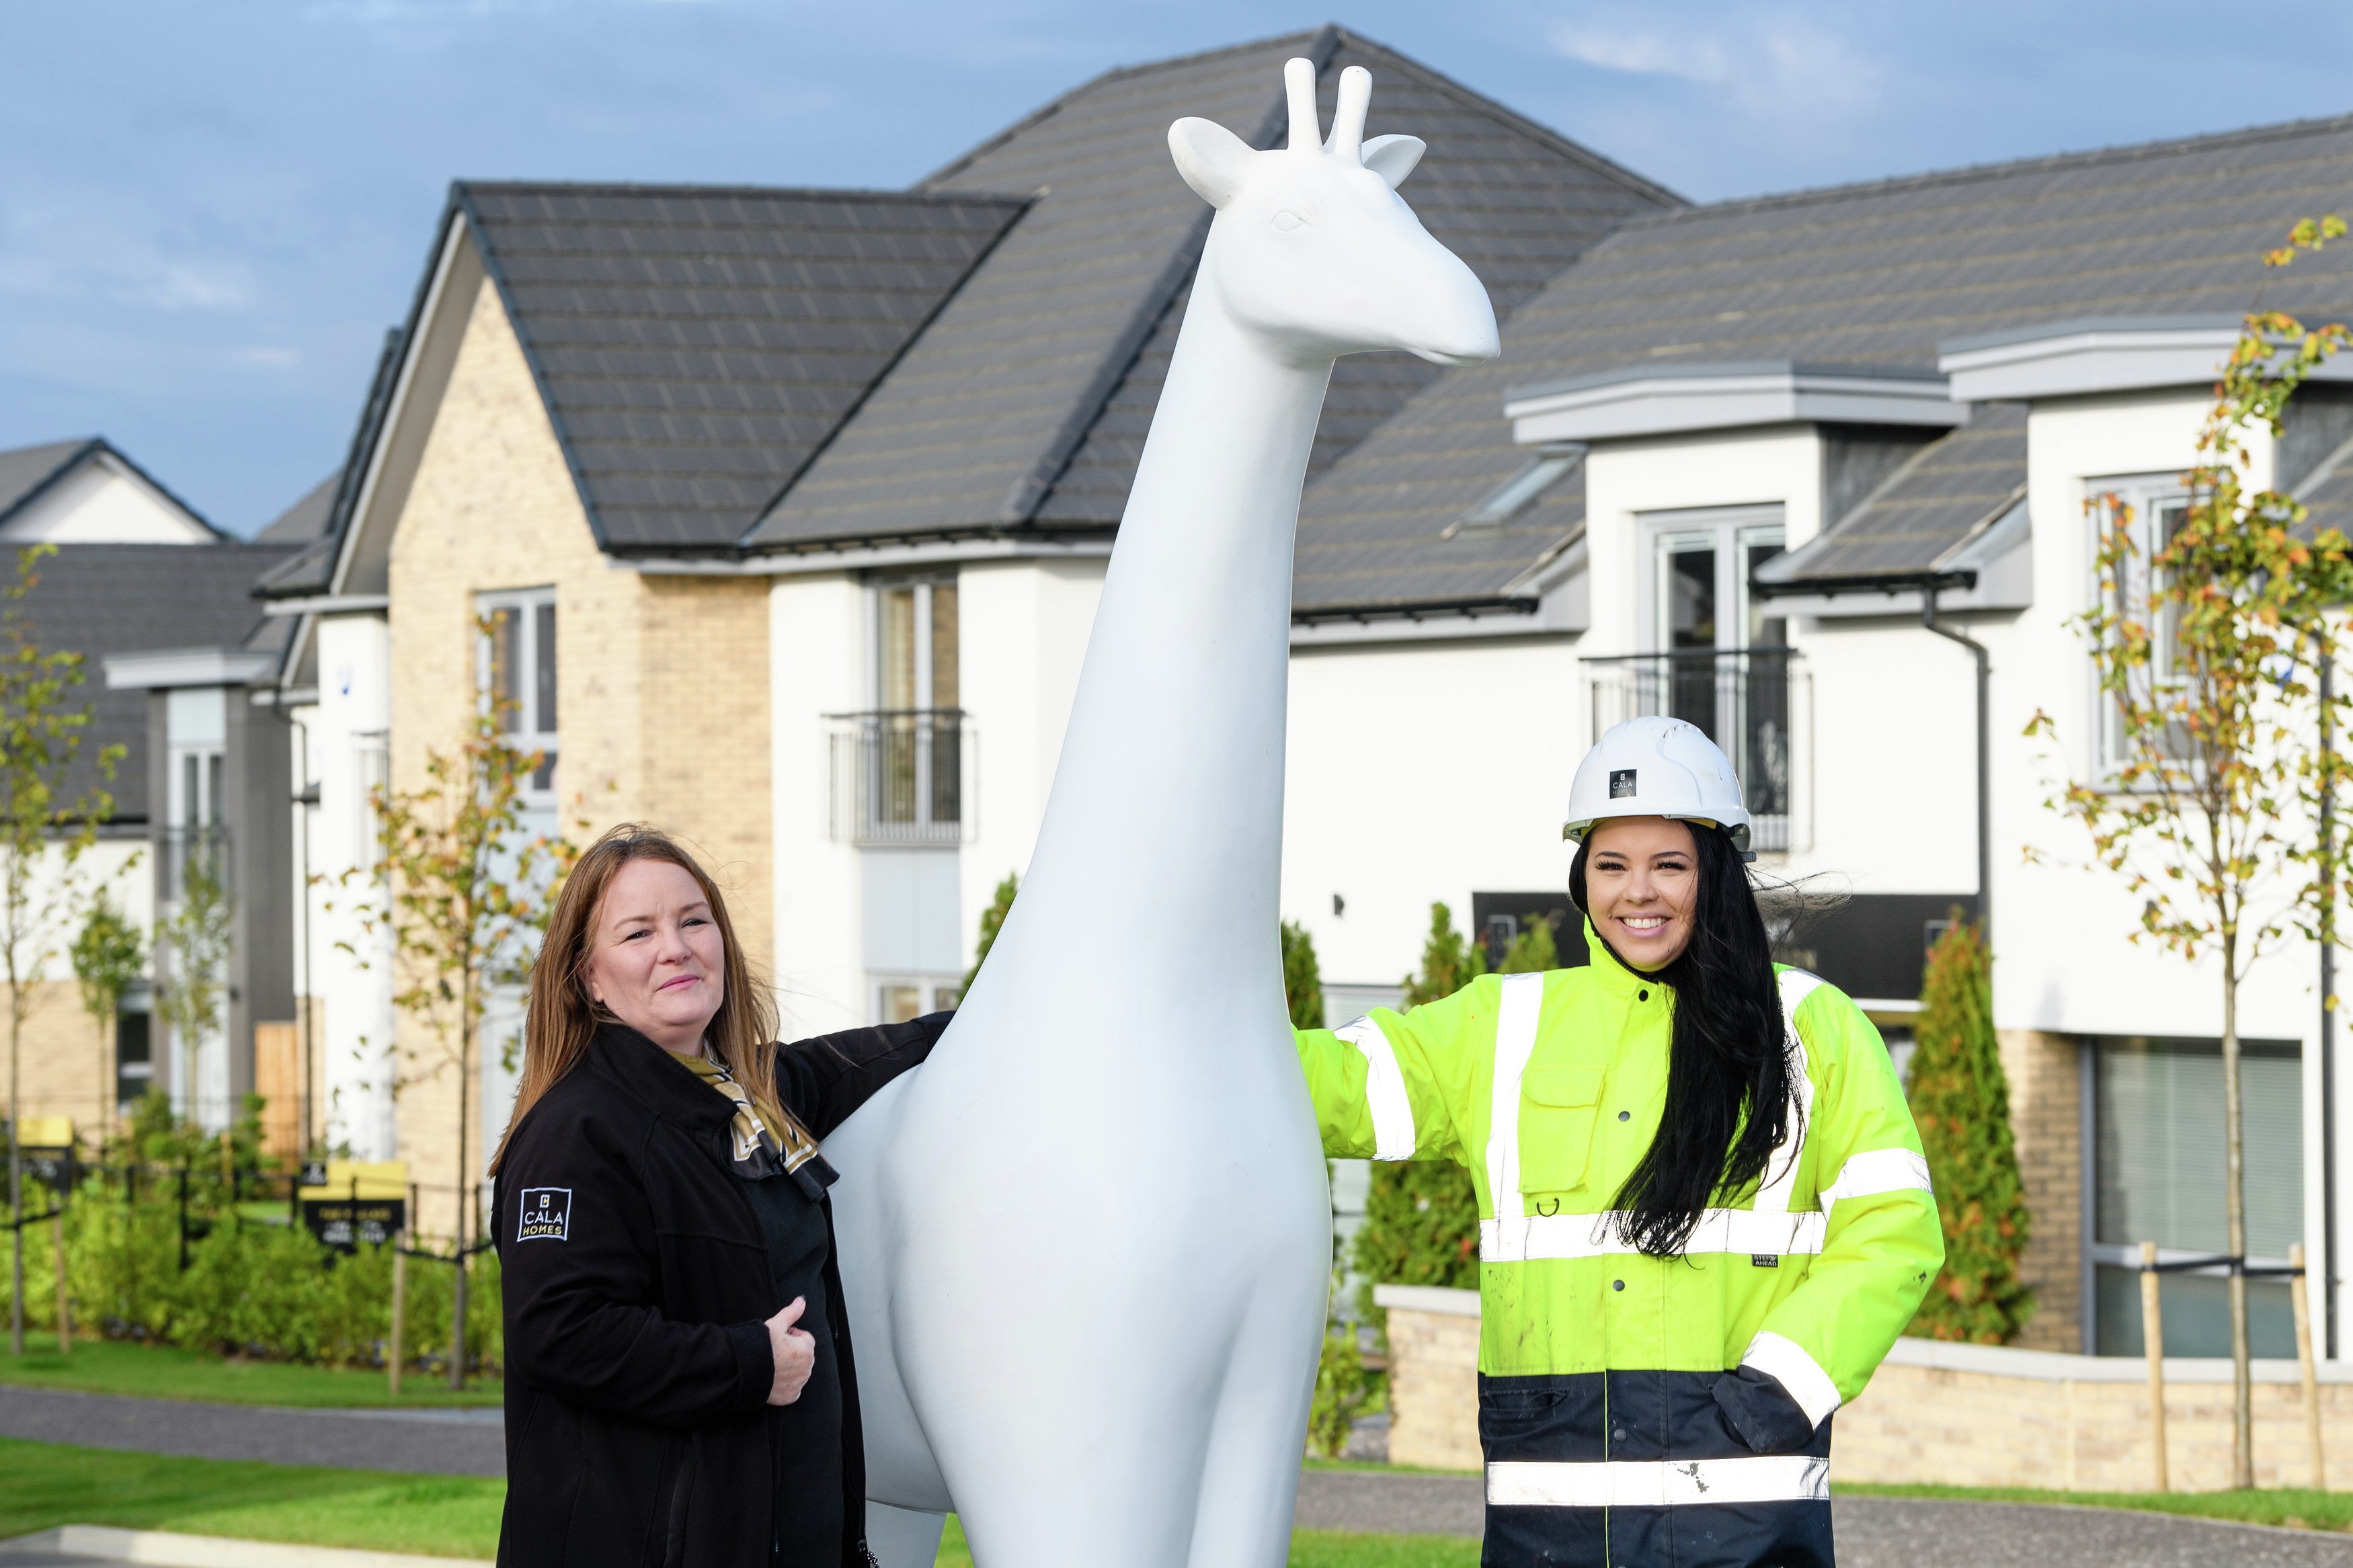 CALA to sponsor Edinburgh giraffe sculpture